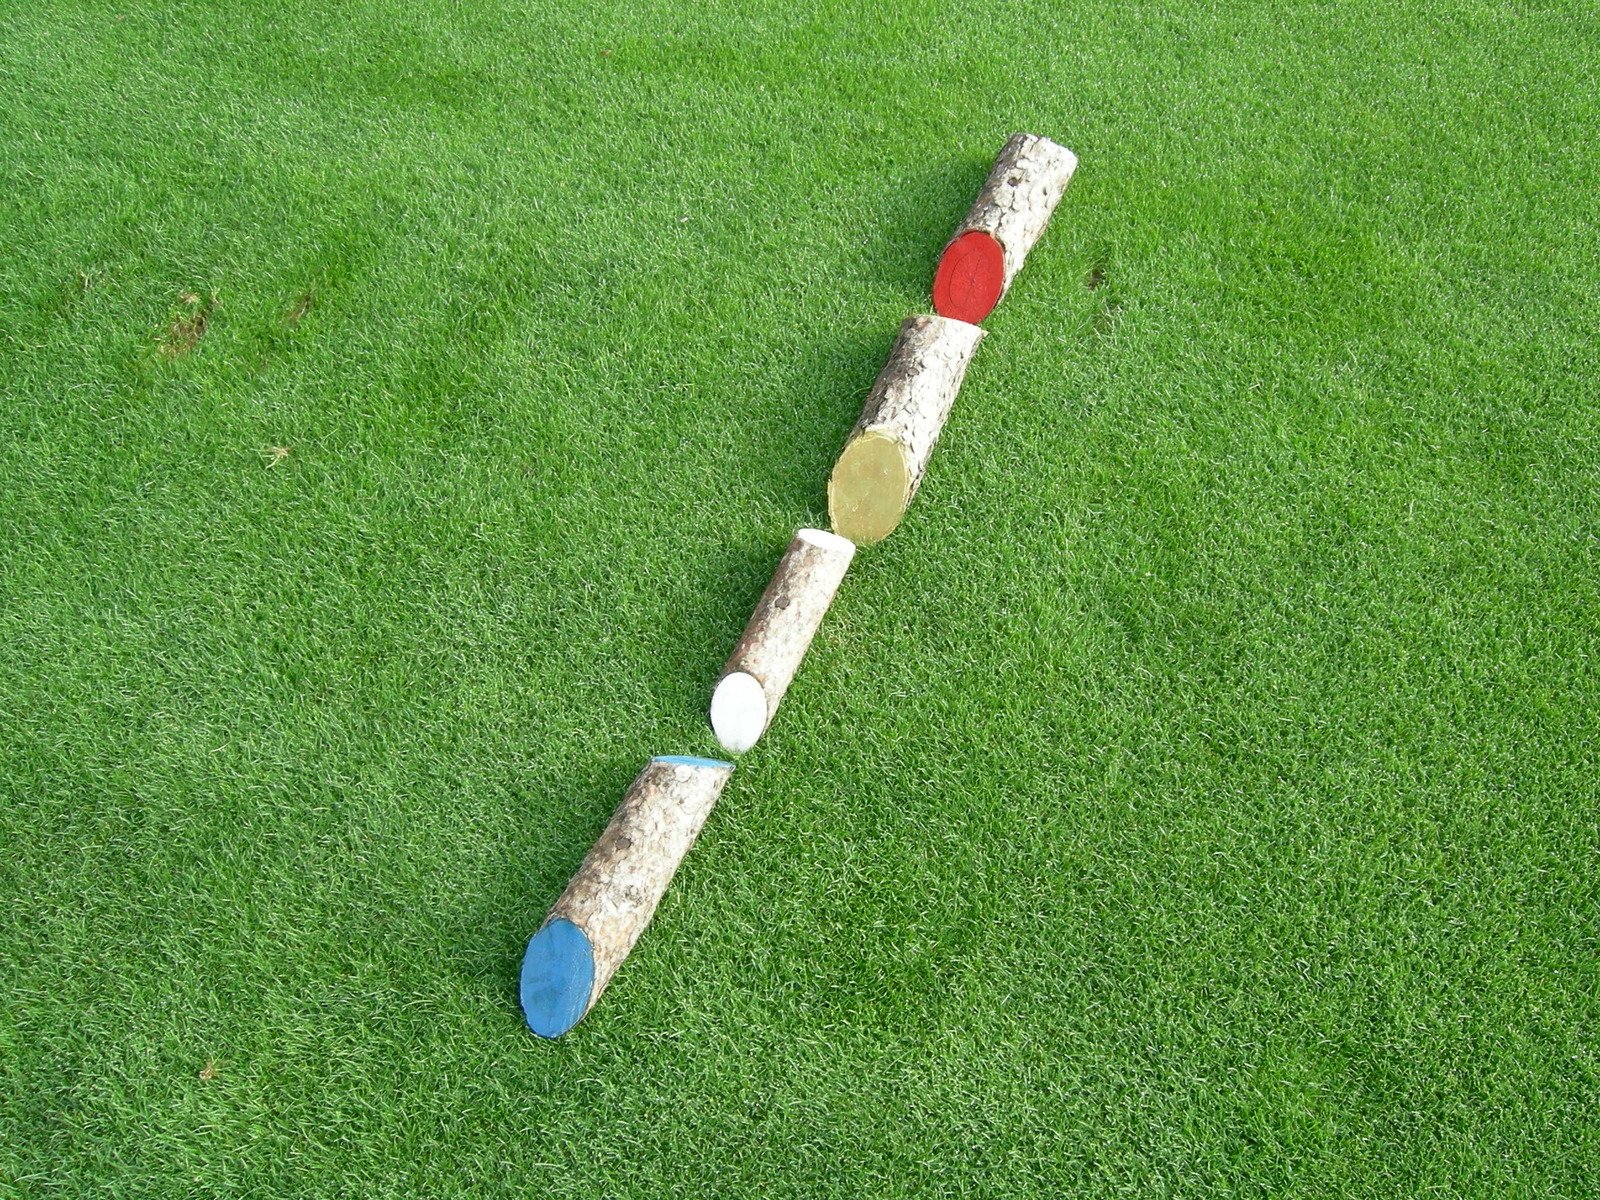 a baseball bat resting on some green grass